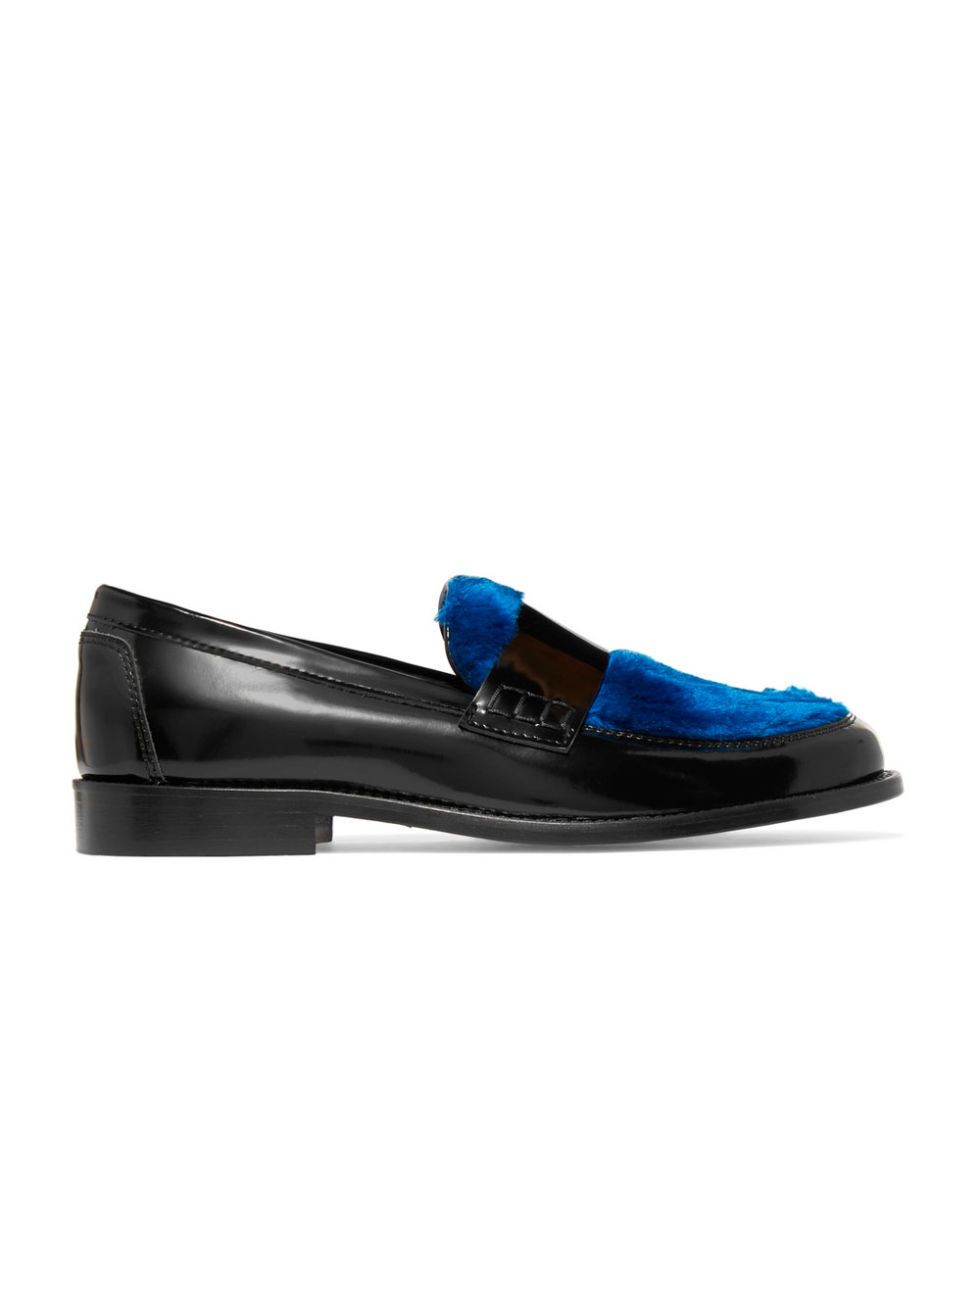 Electric blue, Azure, Cobalt blue, Aqua, Dress shoe, Leather, Walking shoe, 